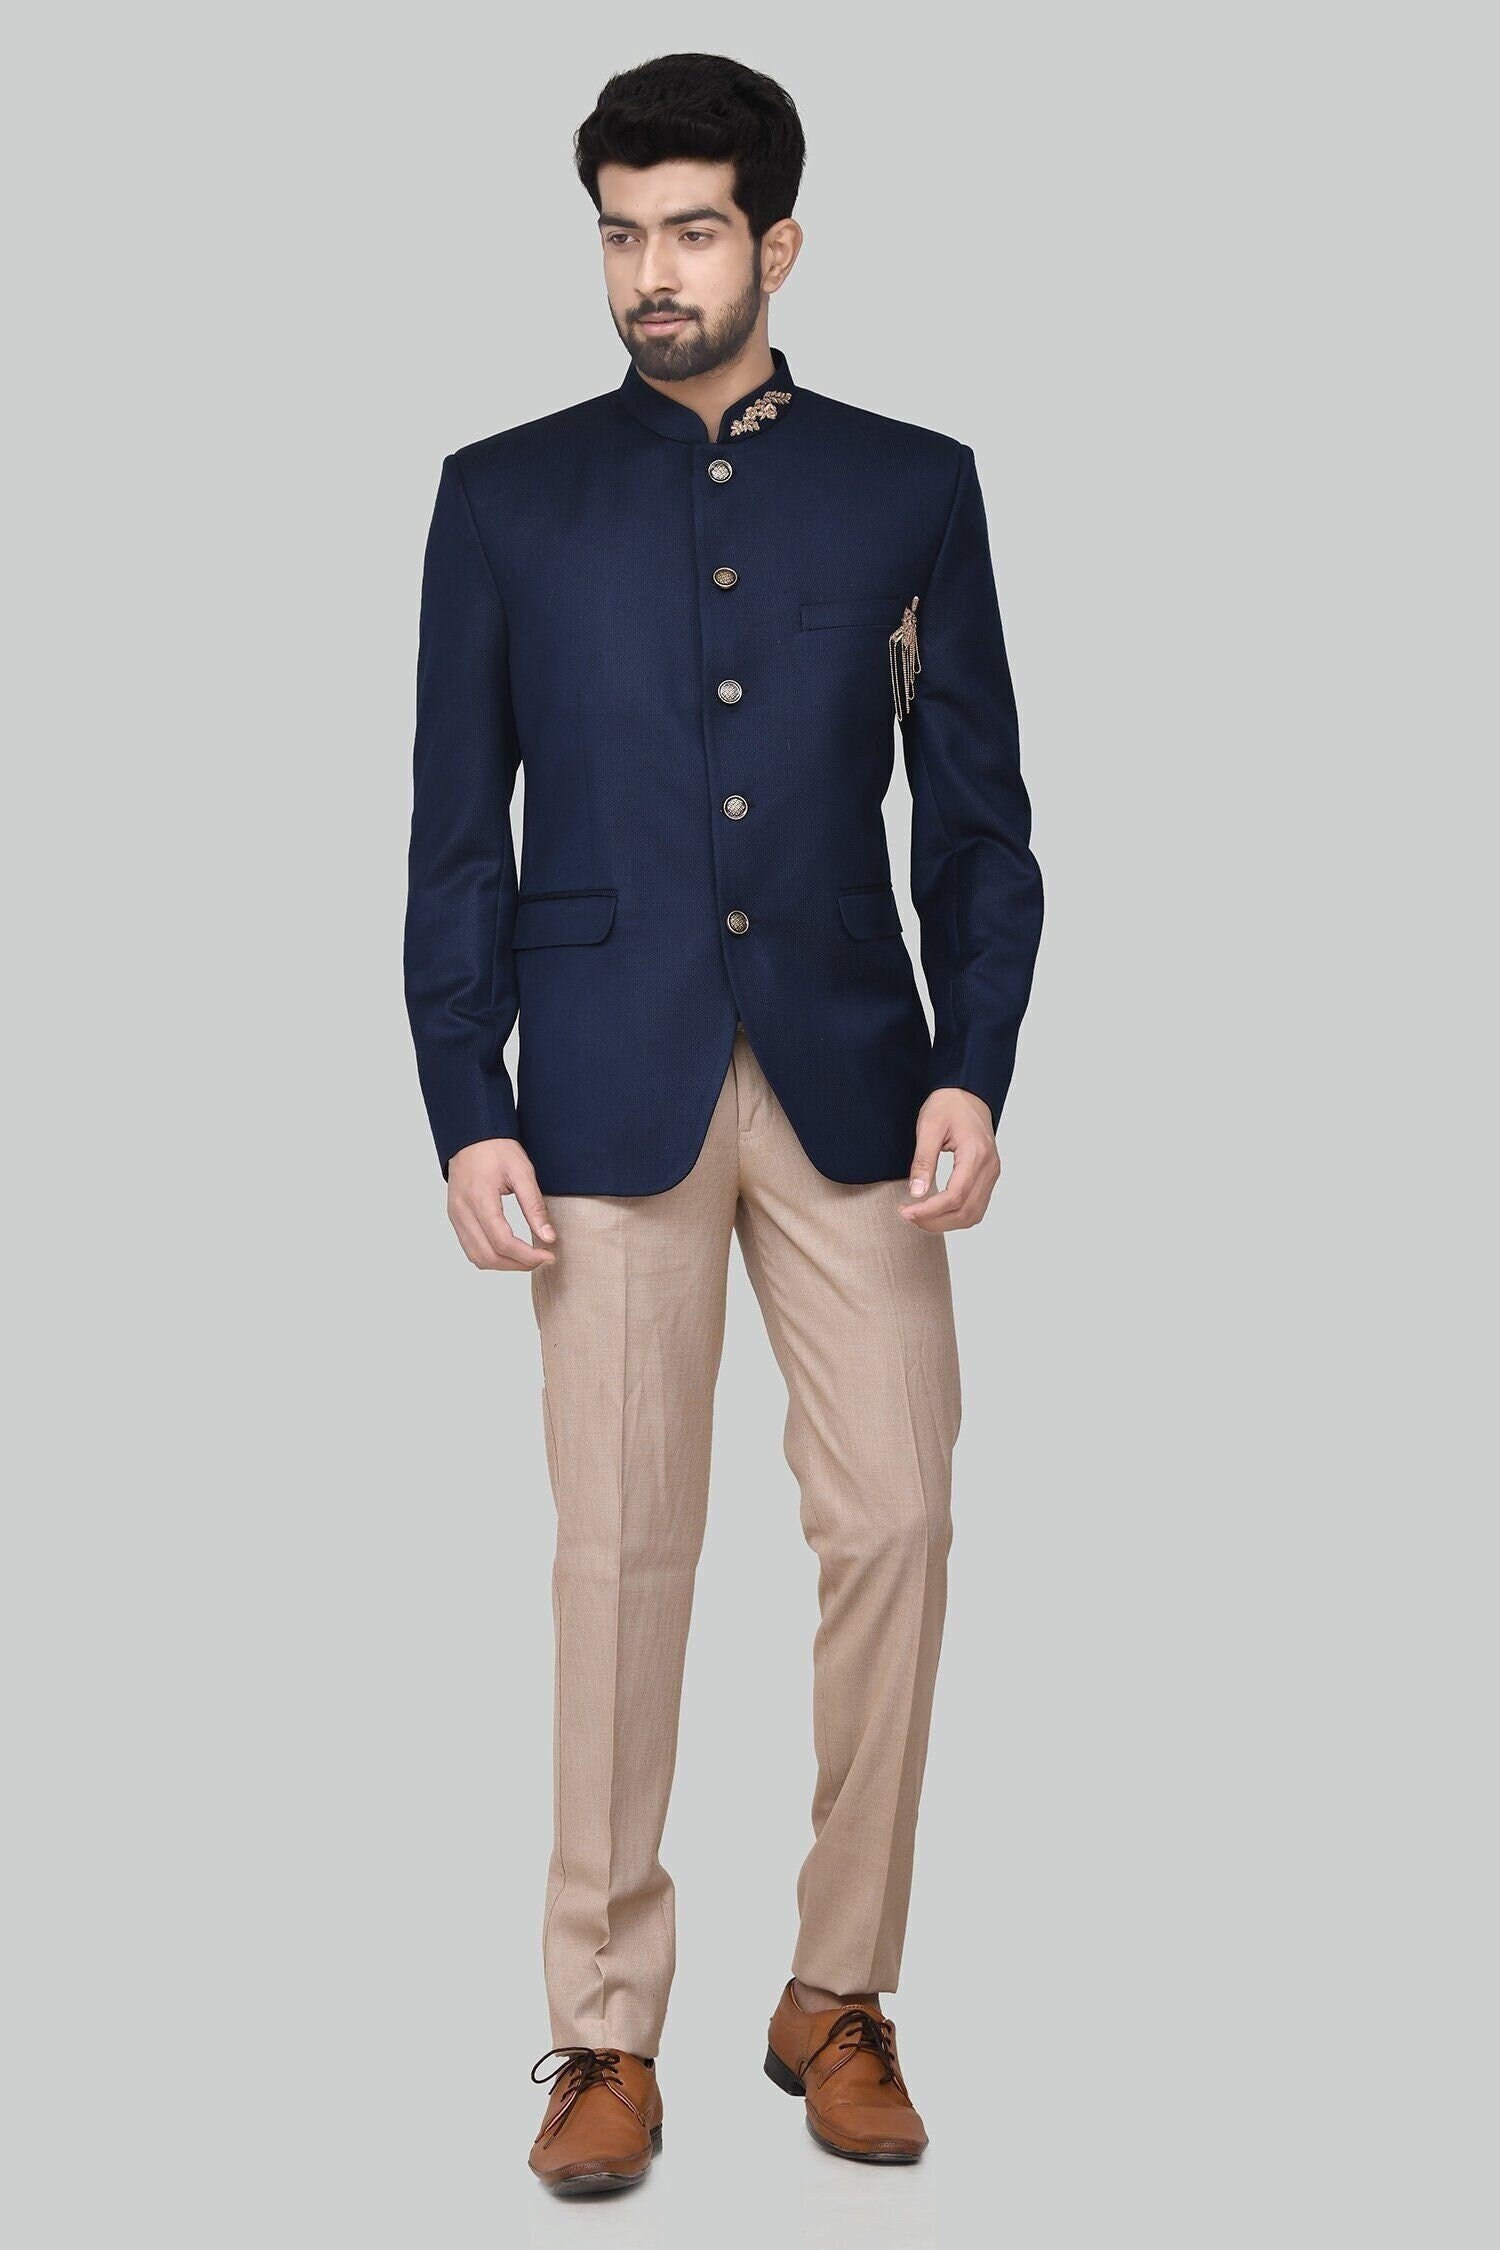 Mens Blue Jodhpuri Suit Jacket Indian Wedding Groom Party Wear Dinner Coat  Pants | eBay